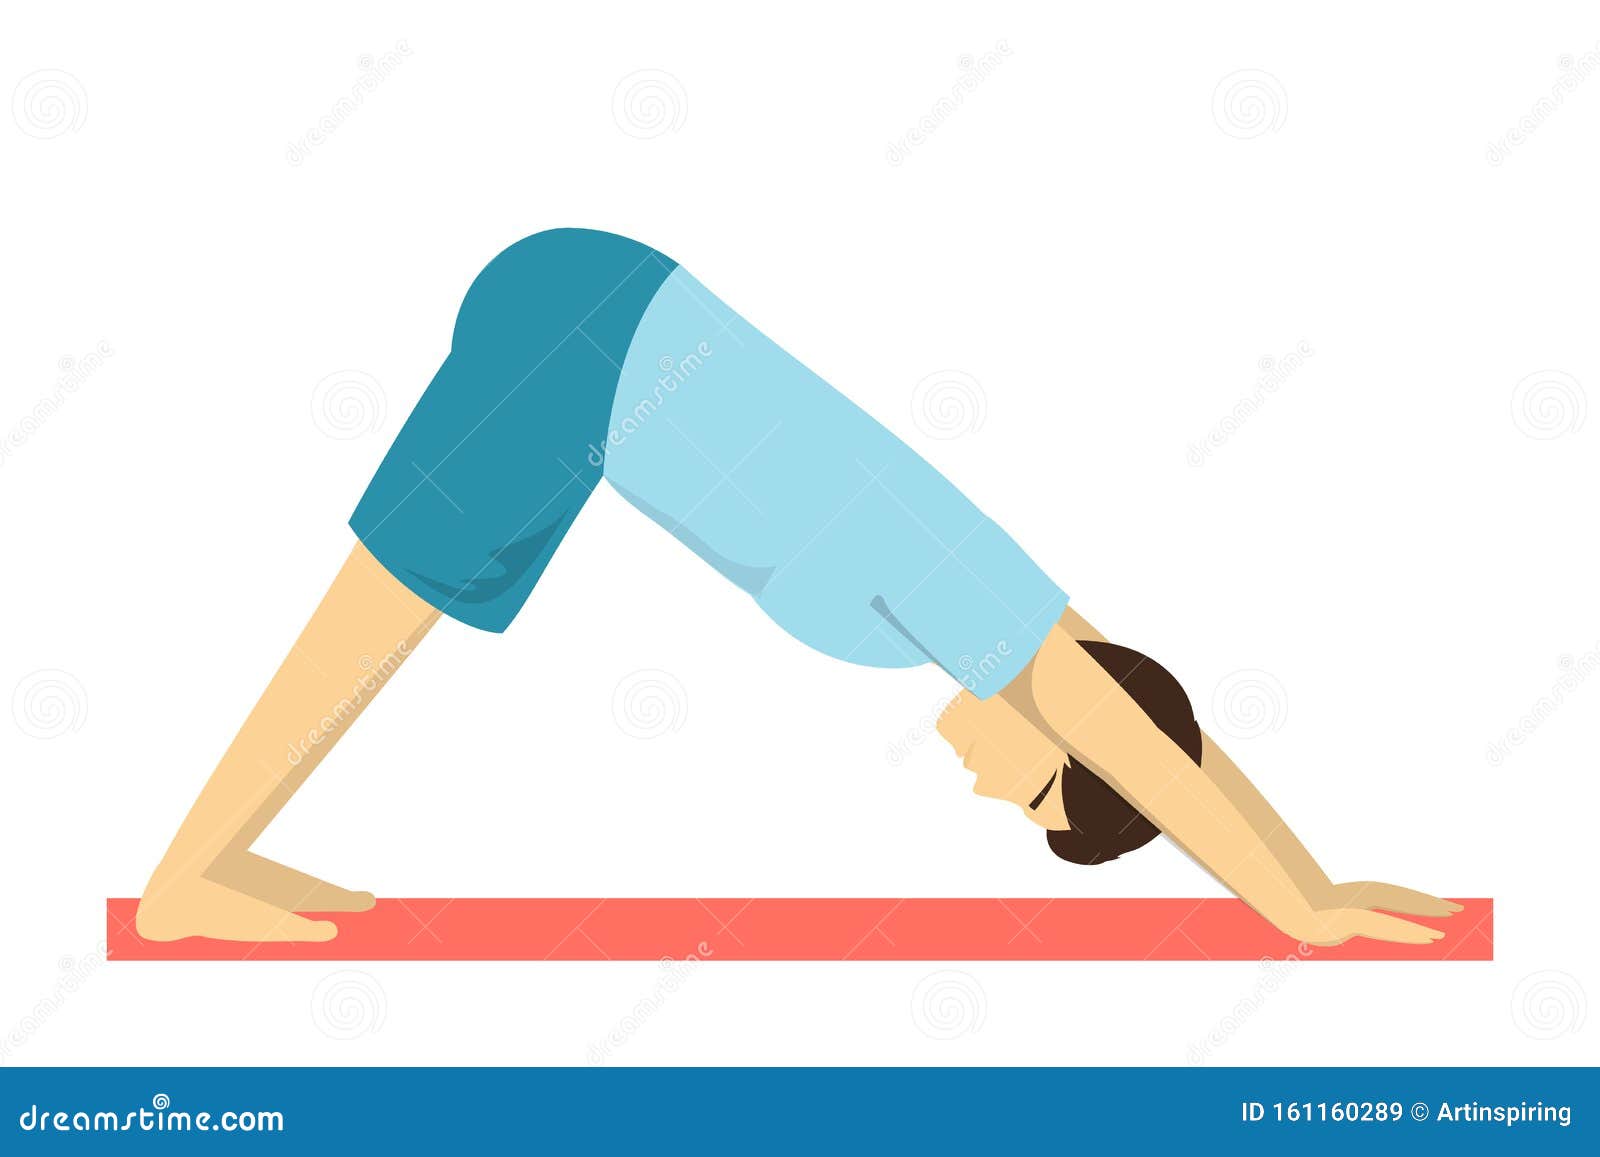 downward facing dog yoga pose. fitness exercise